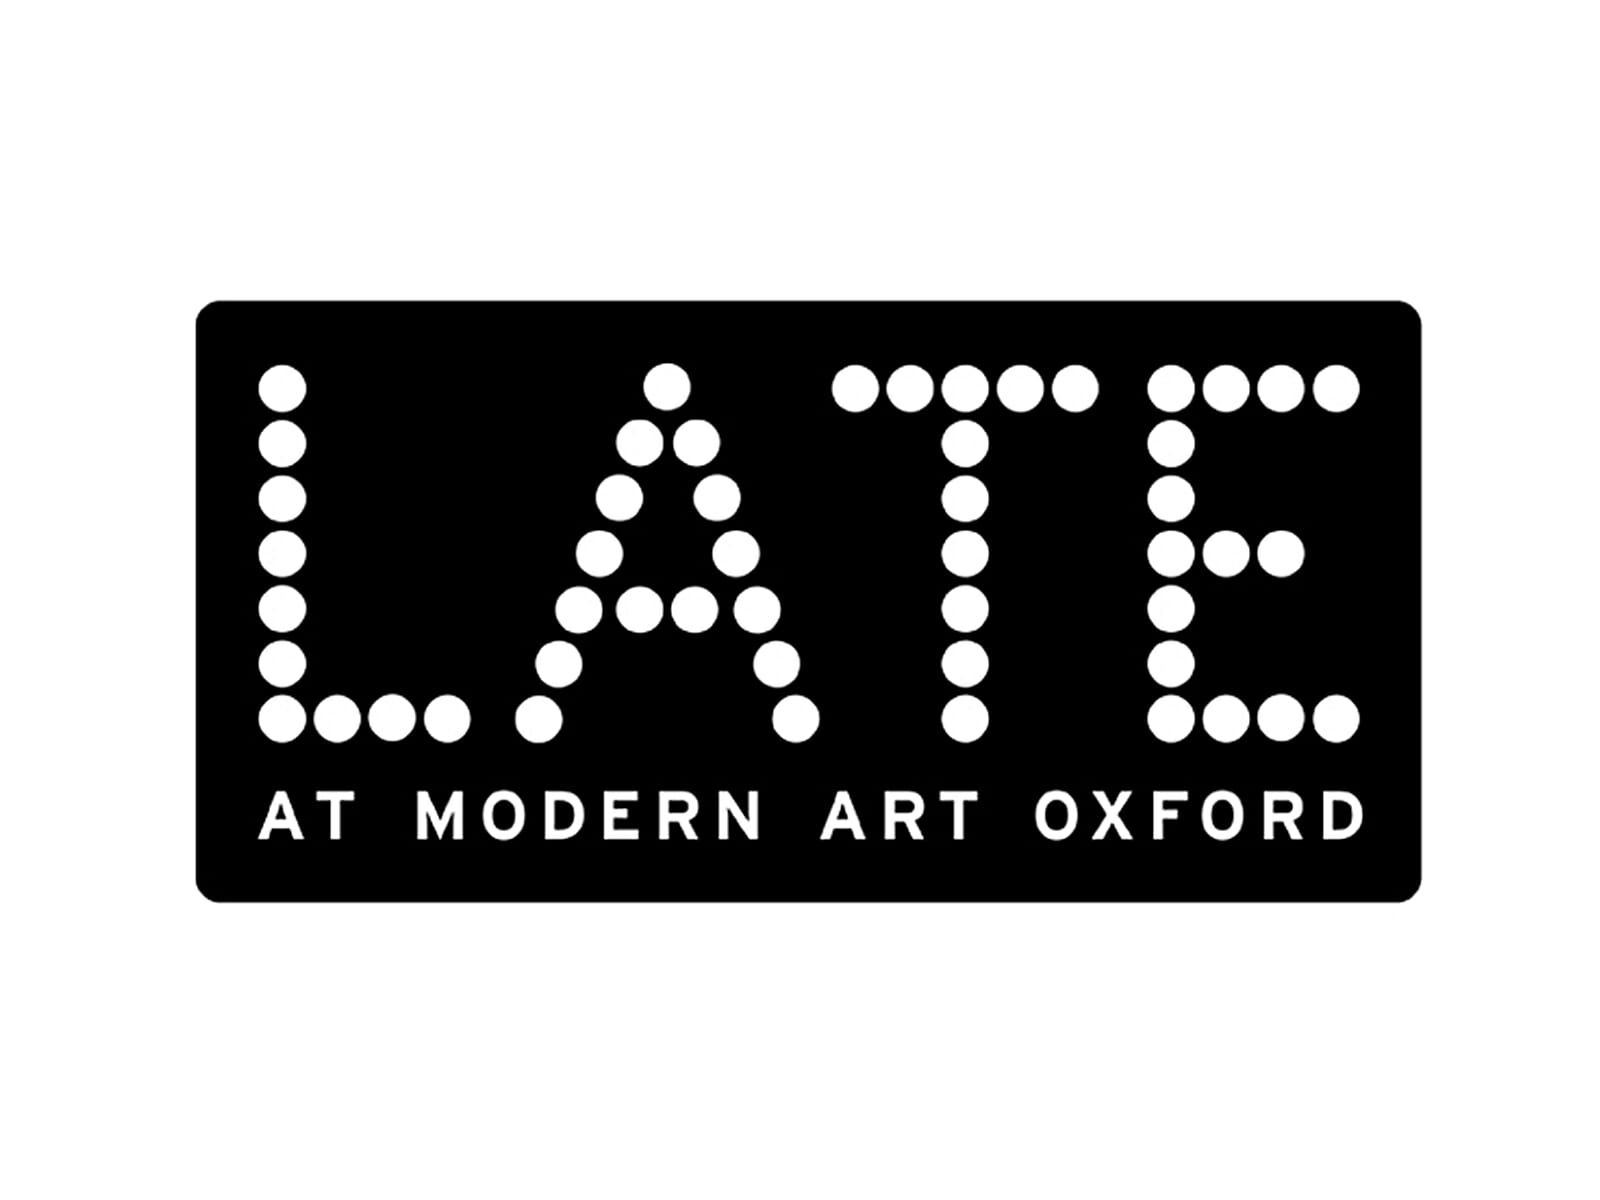 Late at Modern Art Oxford